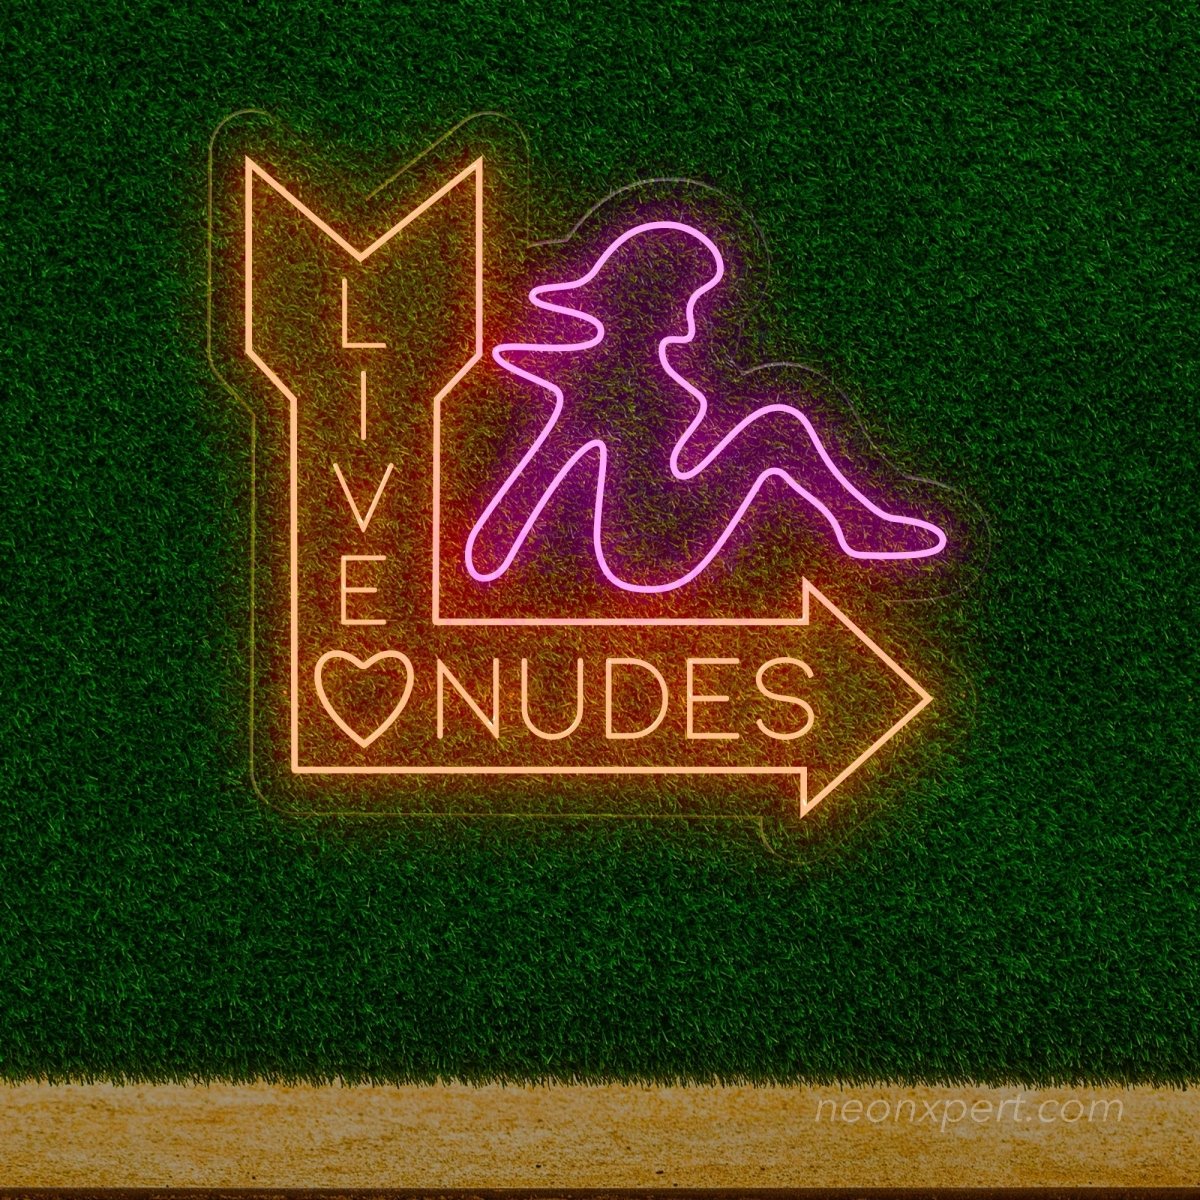 Live Nudes Neon LED Light Sign - NeonXpert